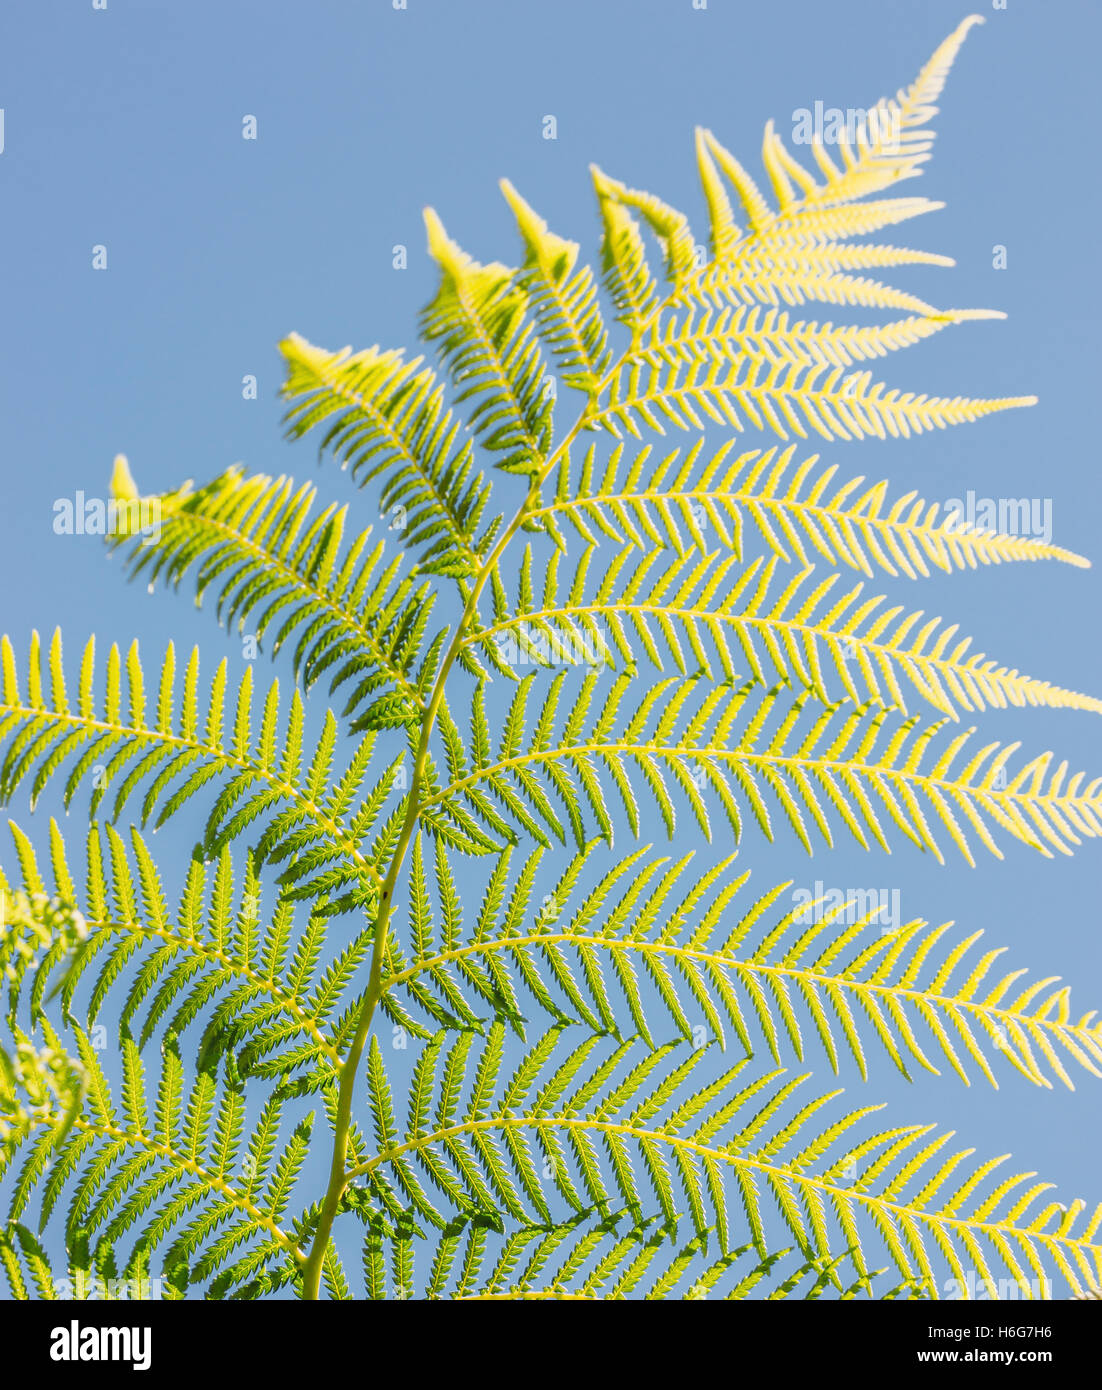 A closeup of a bright green fern against a blue sky. Stock Photo